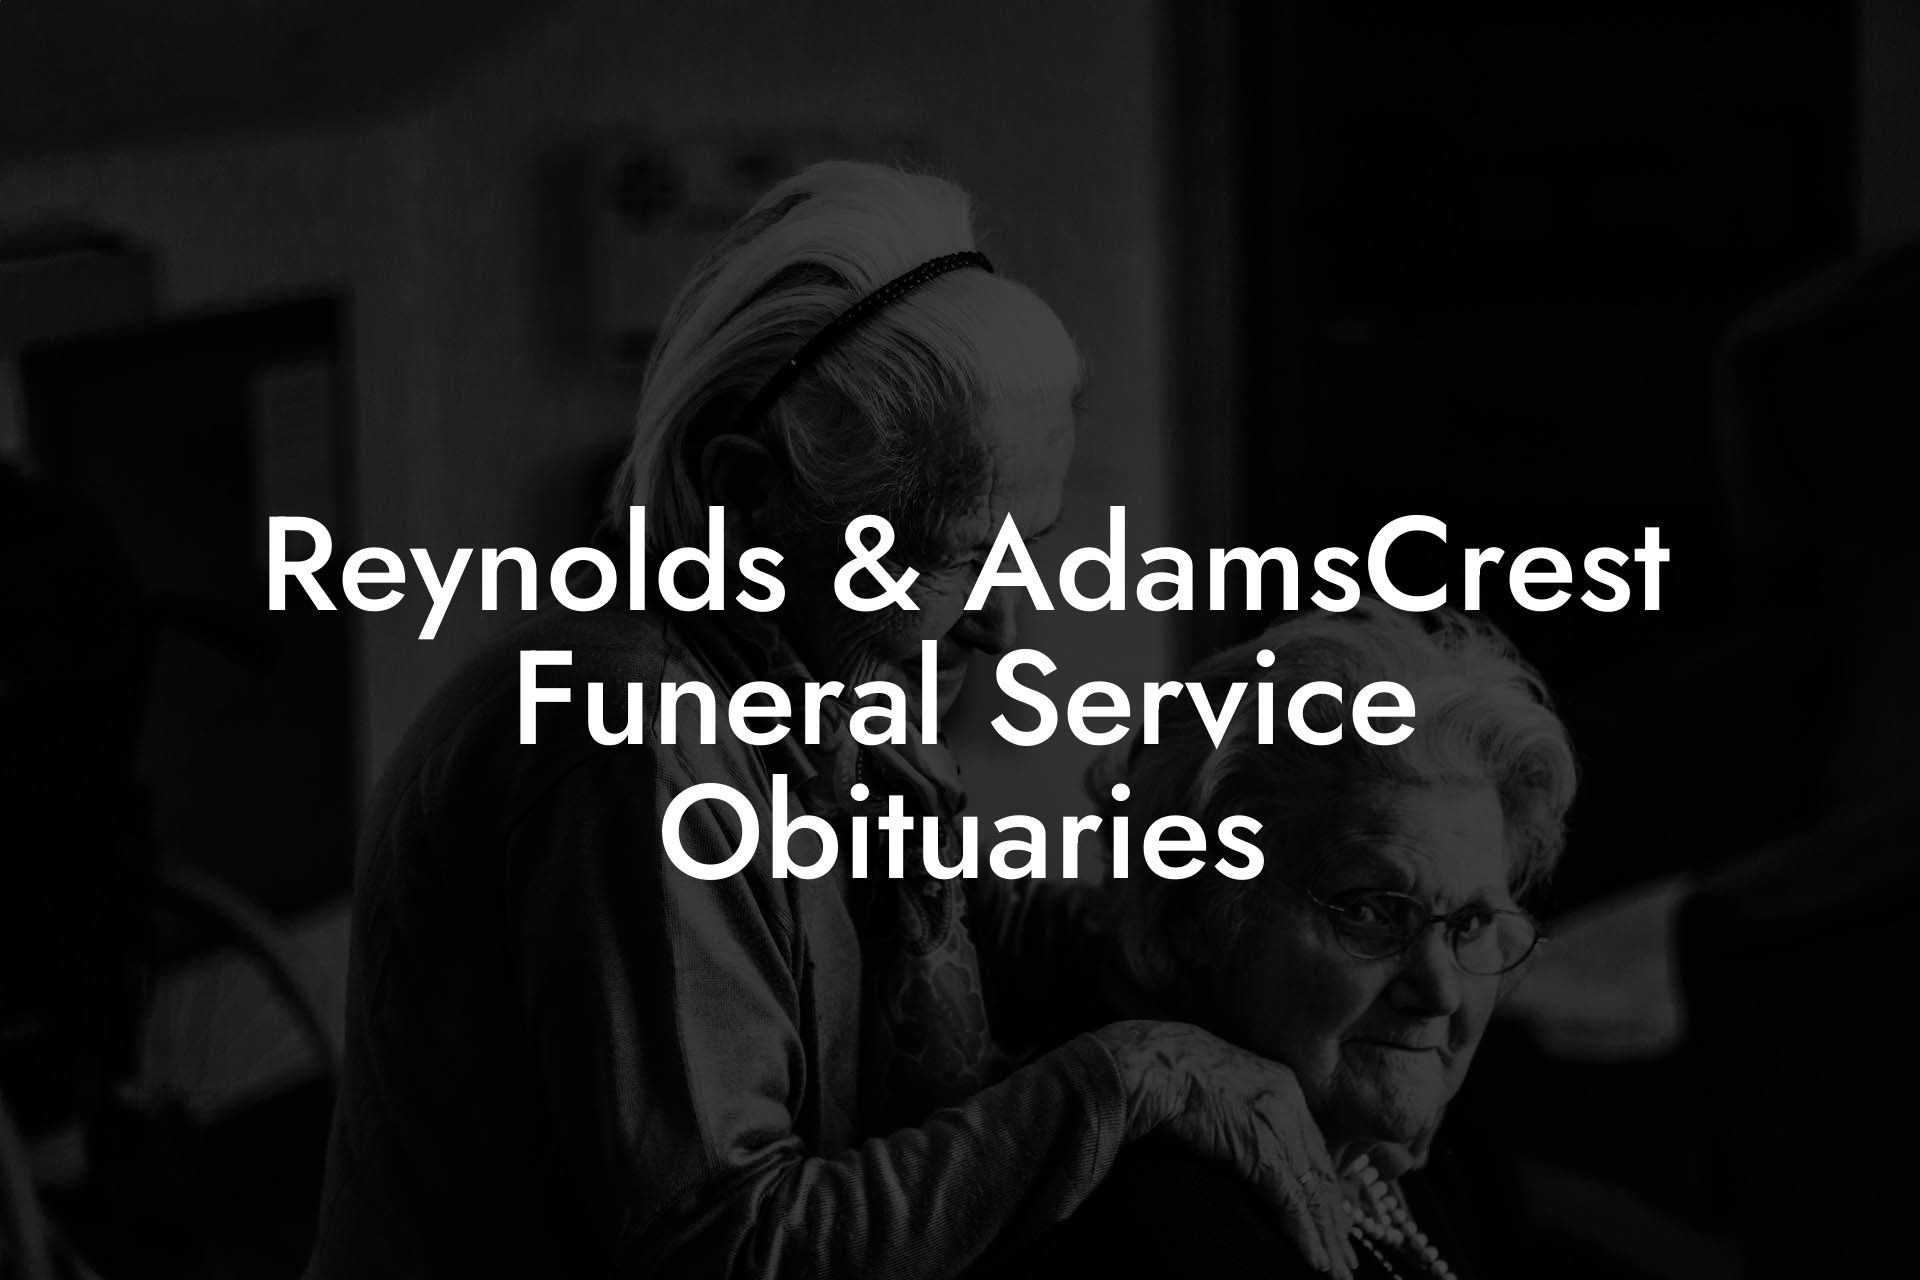 Reynolds & AdamsCrest Funeral Service Obituaries